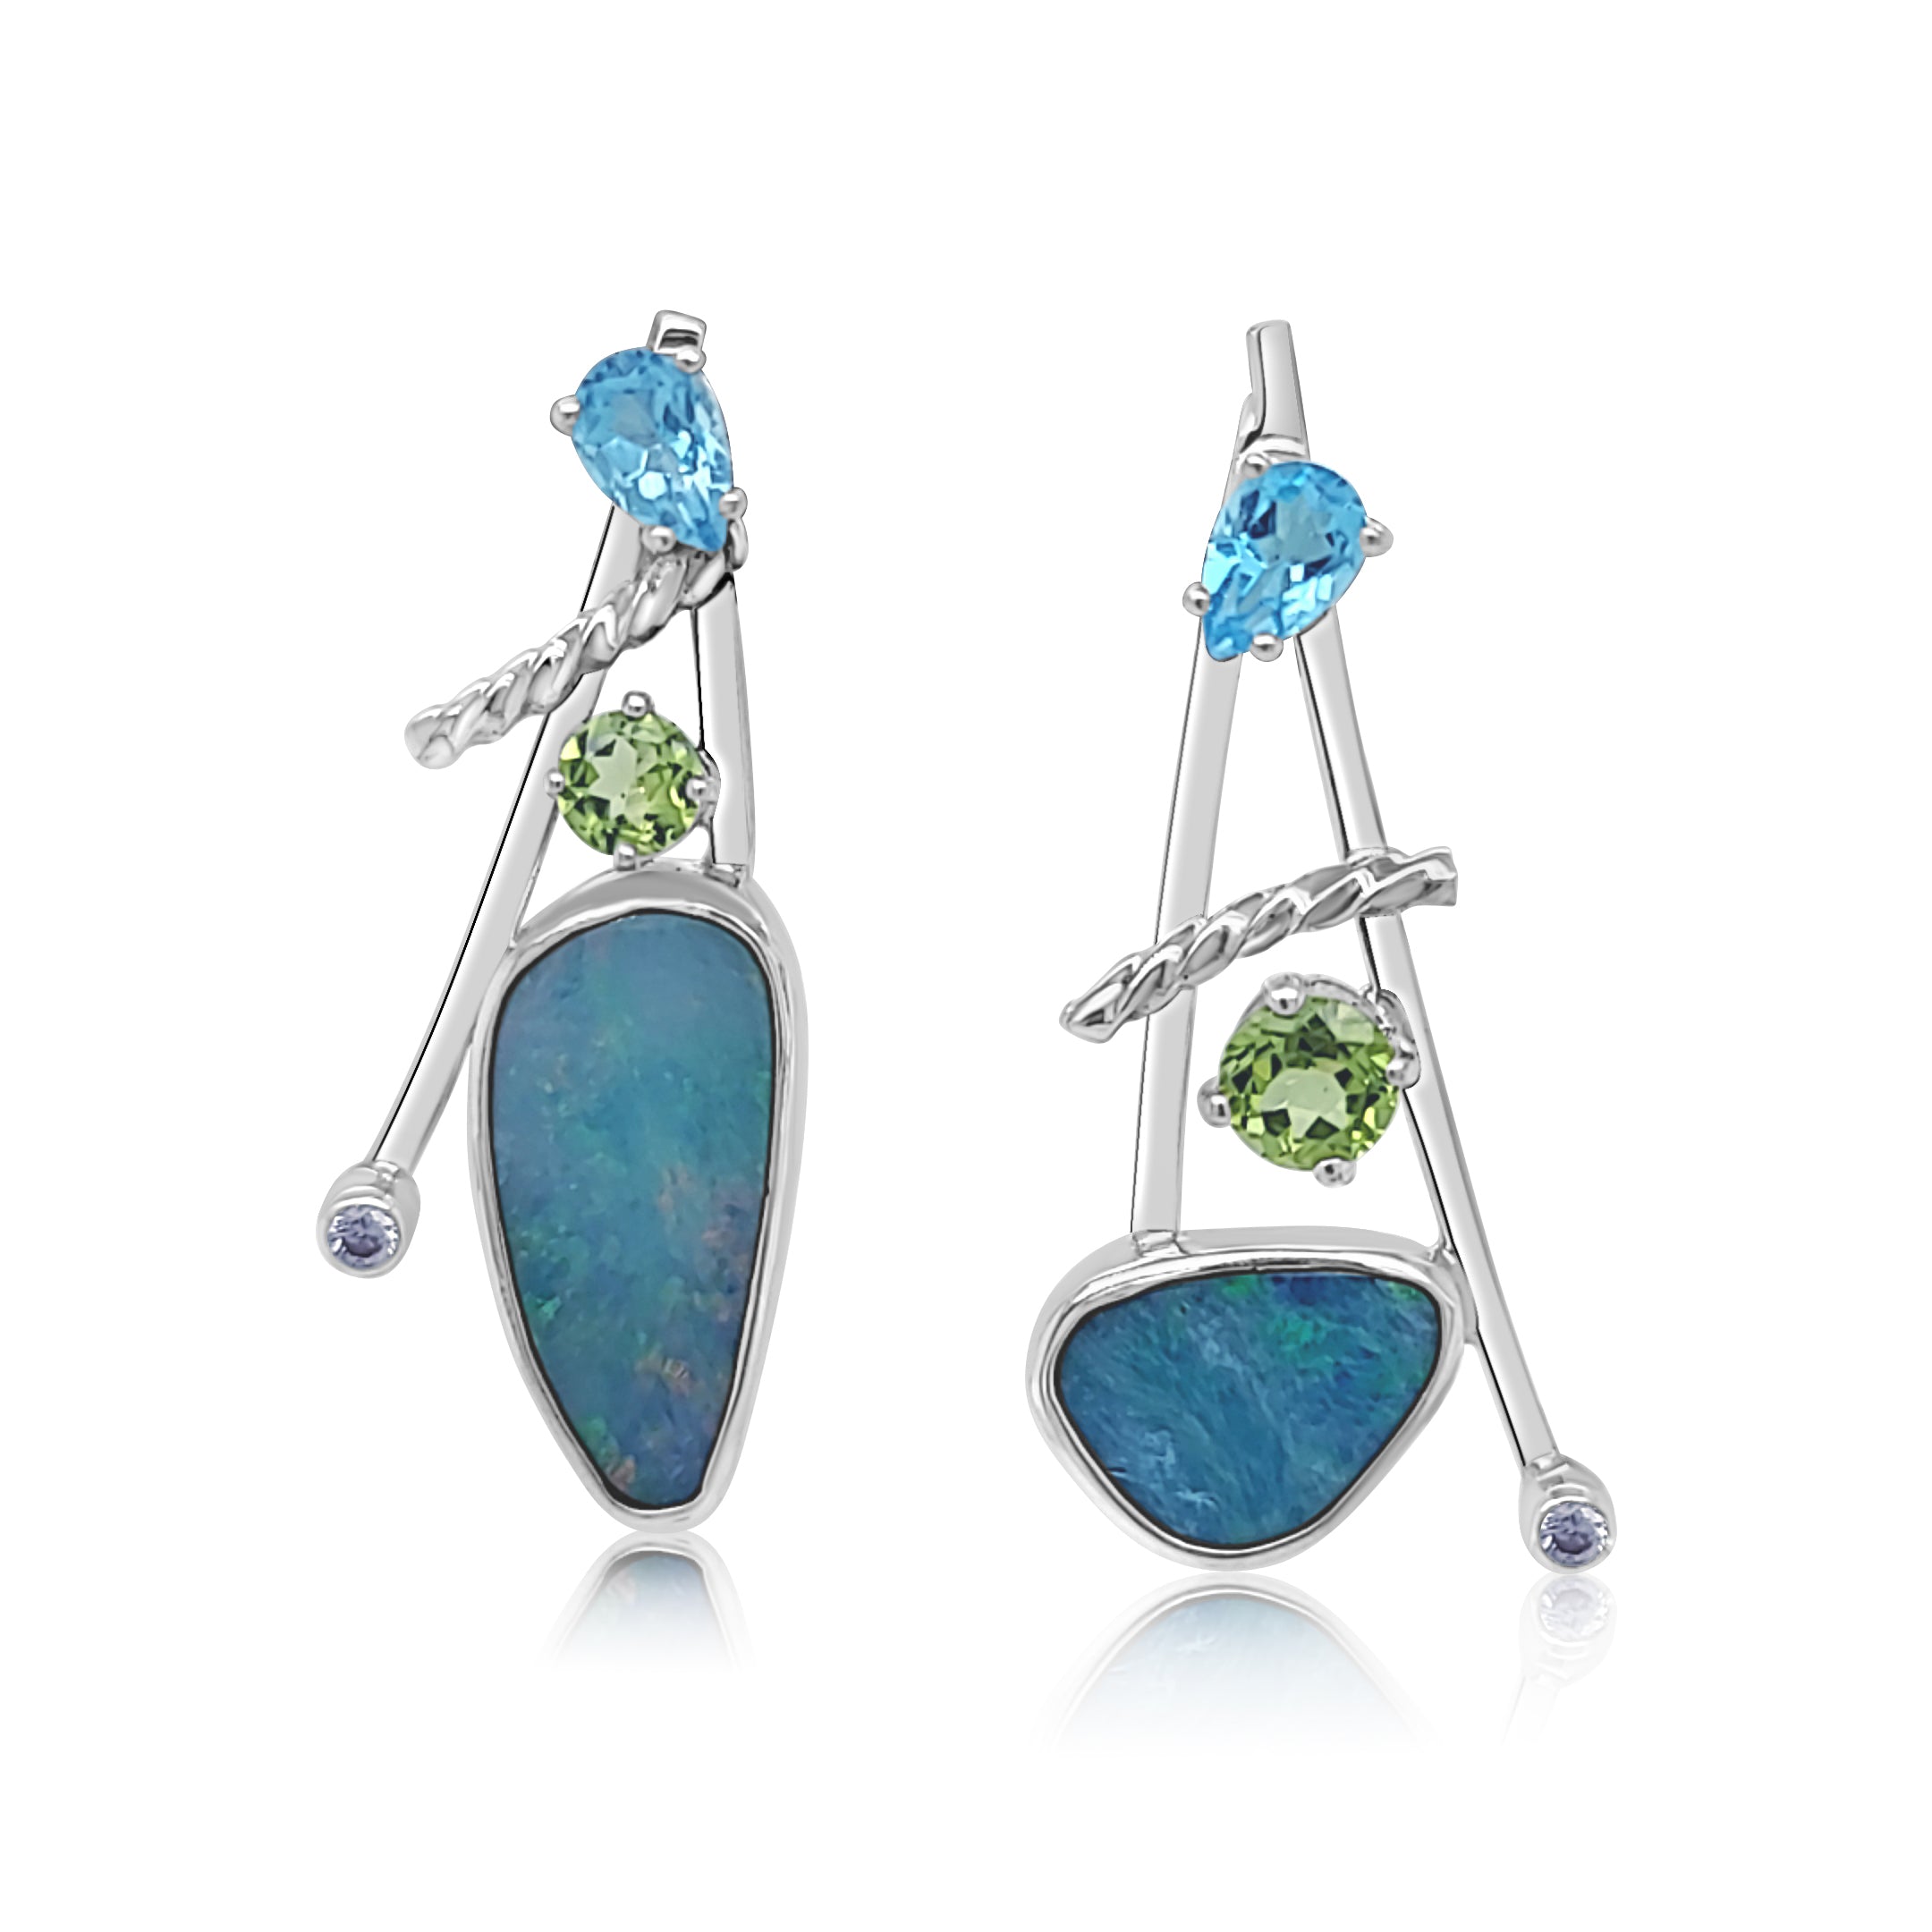 Opal Earrings with Flair